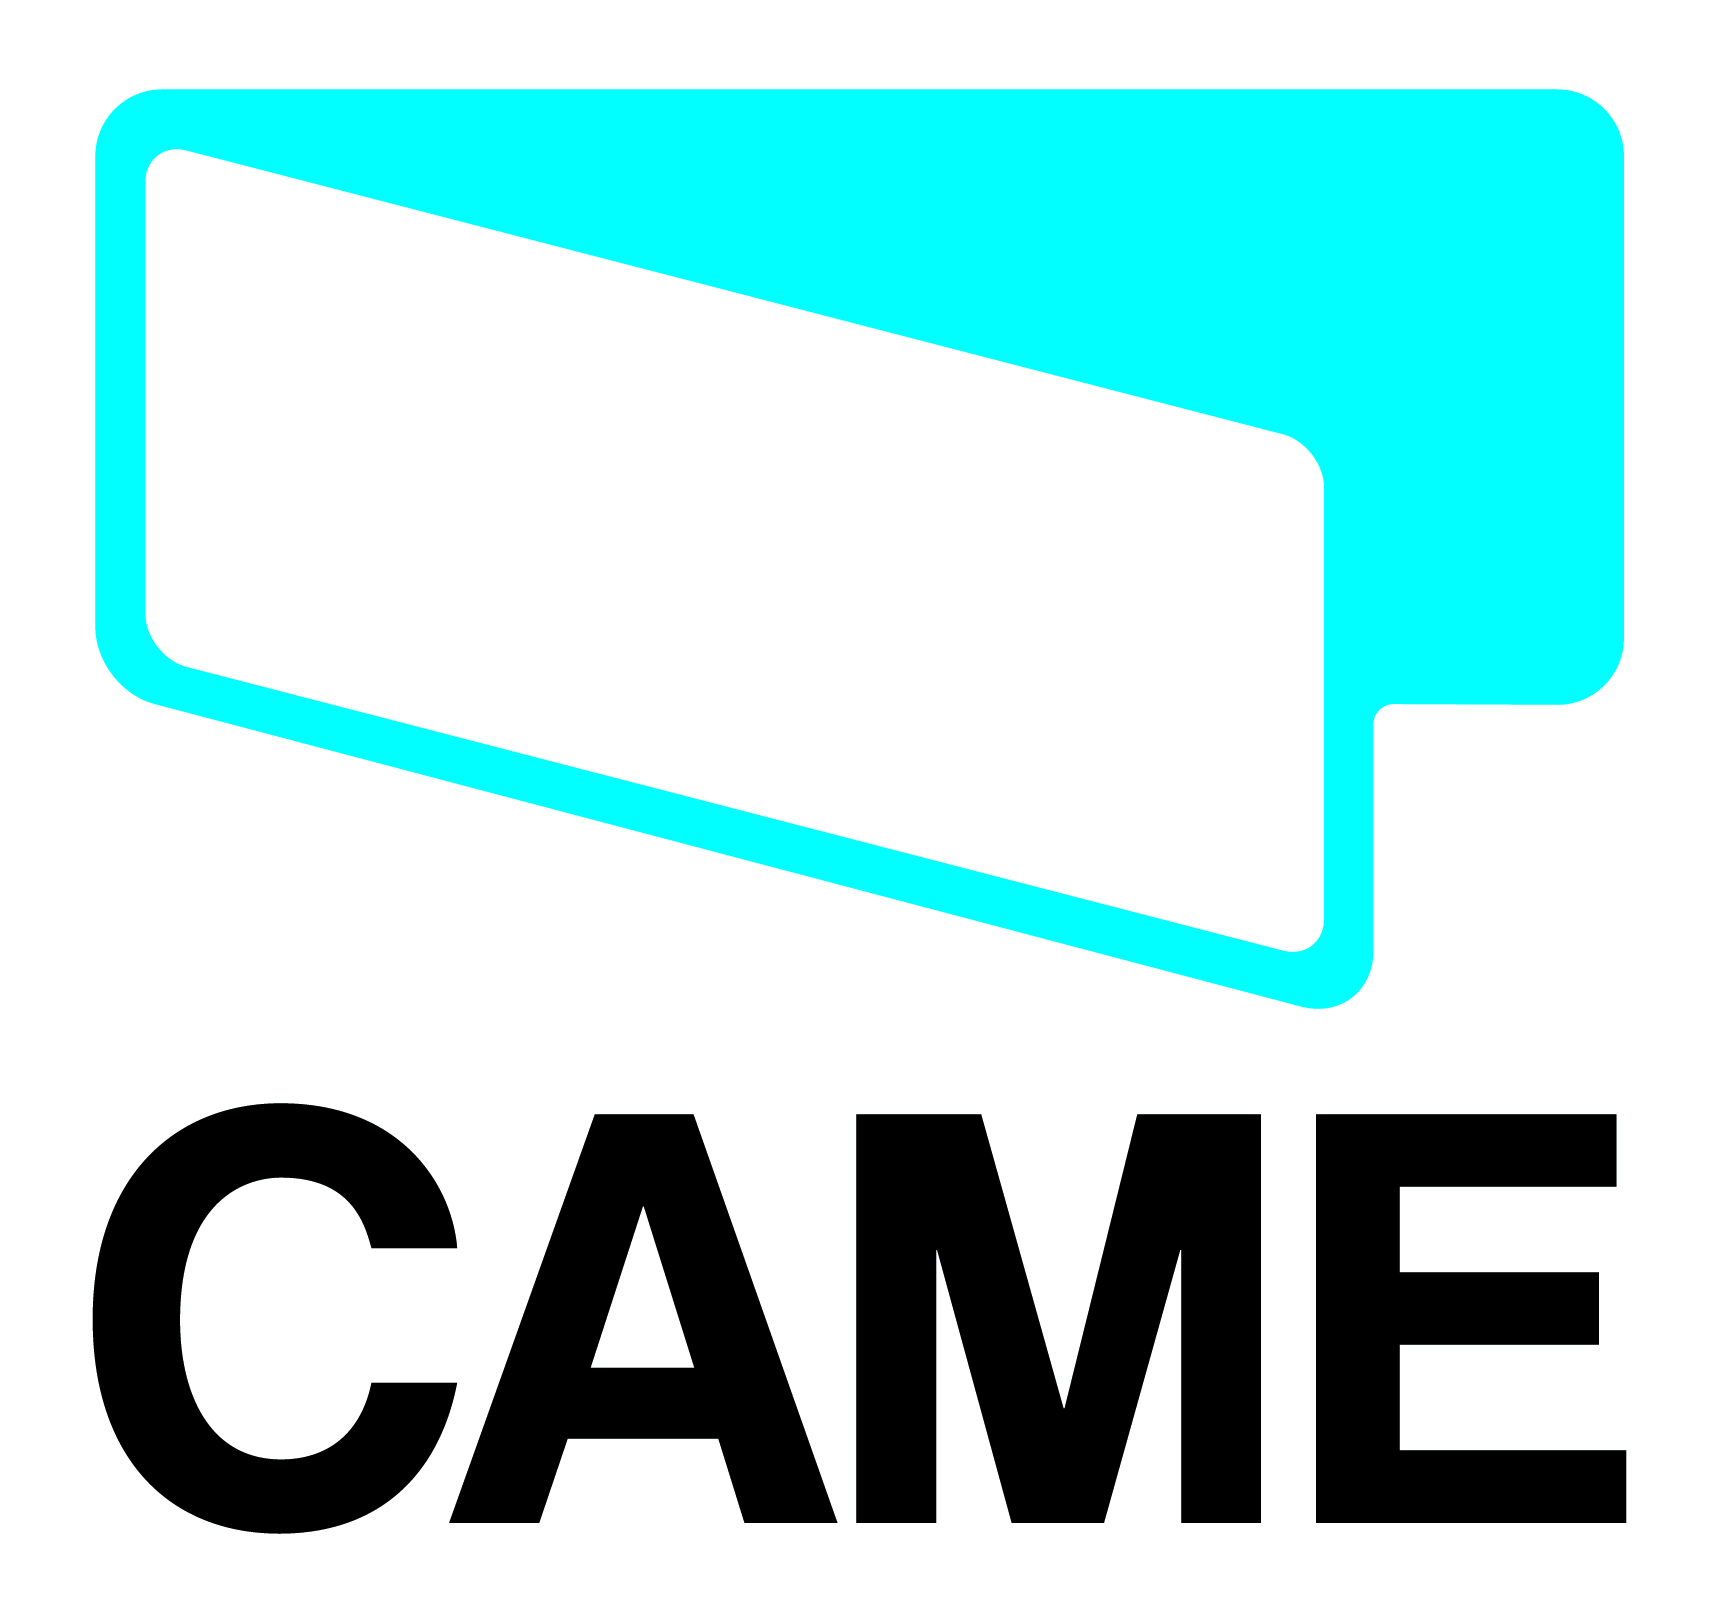 came_logo.jpg